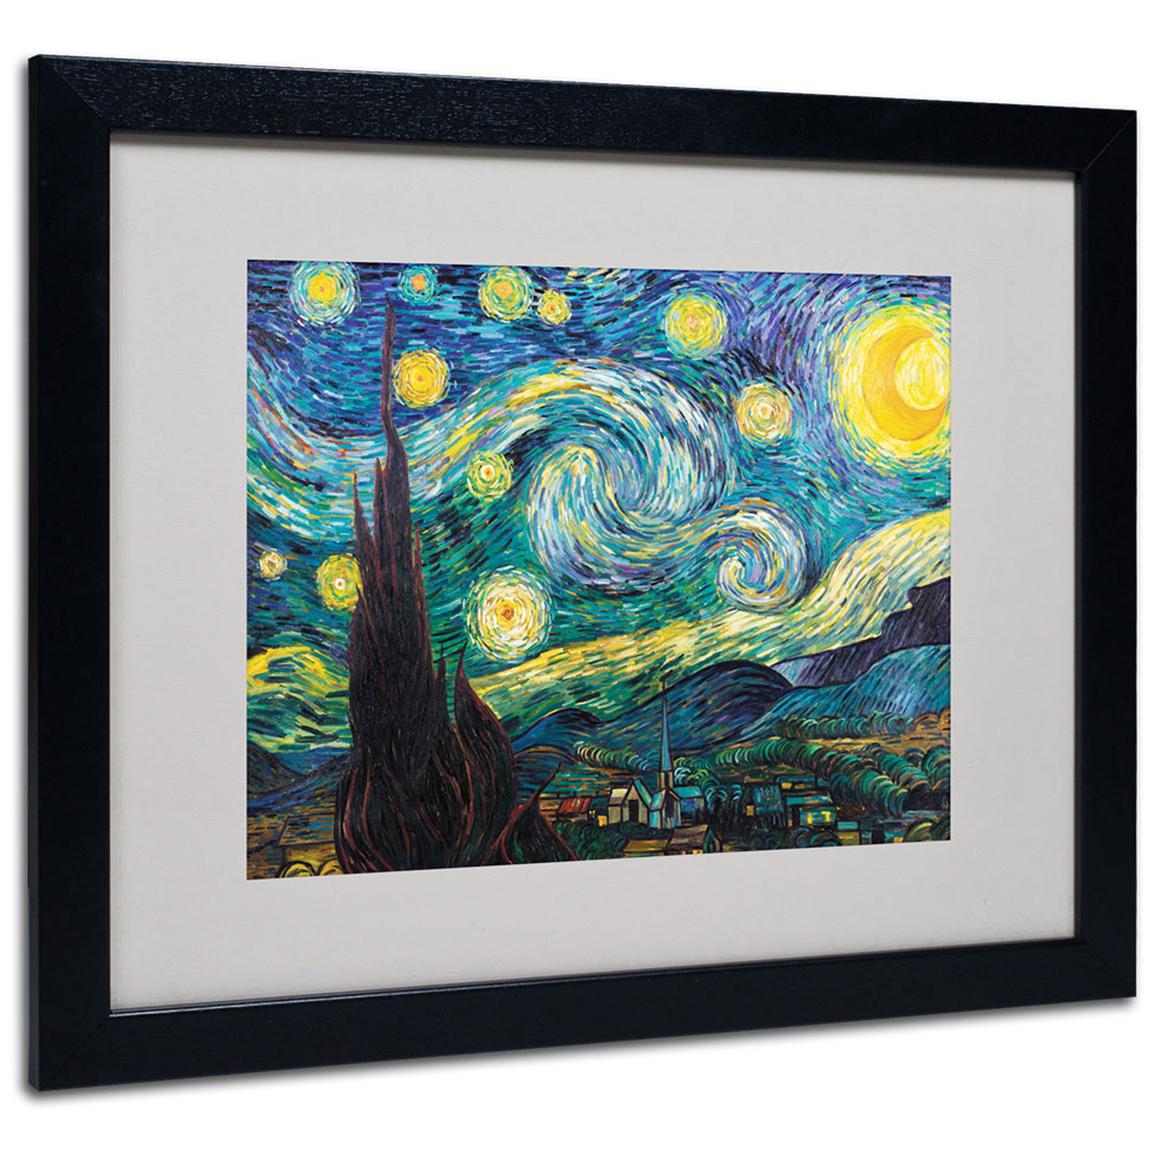 "Starry Night" Framed Matted Art by Vincent van Gogh, Black